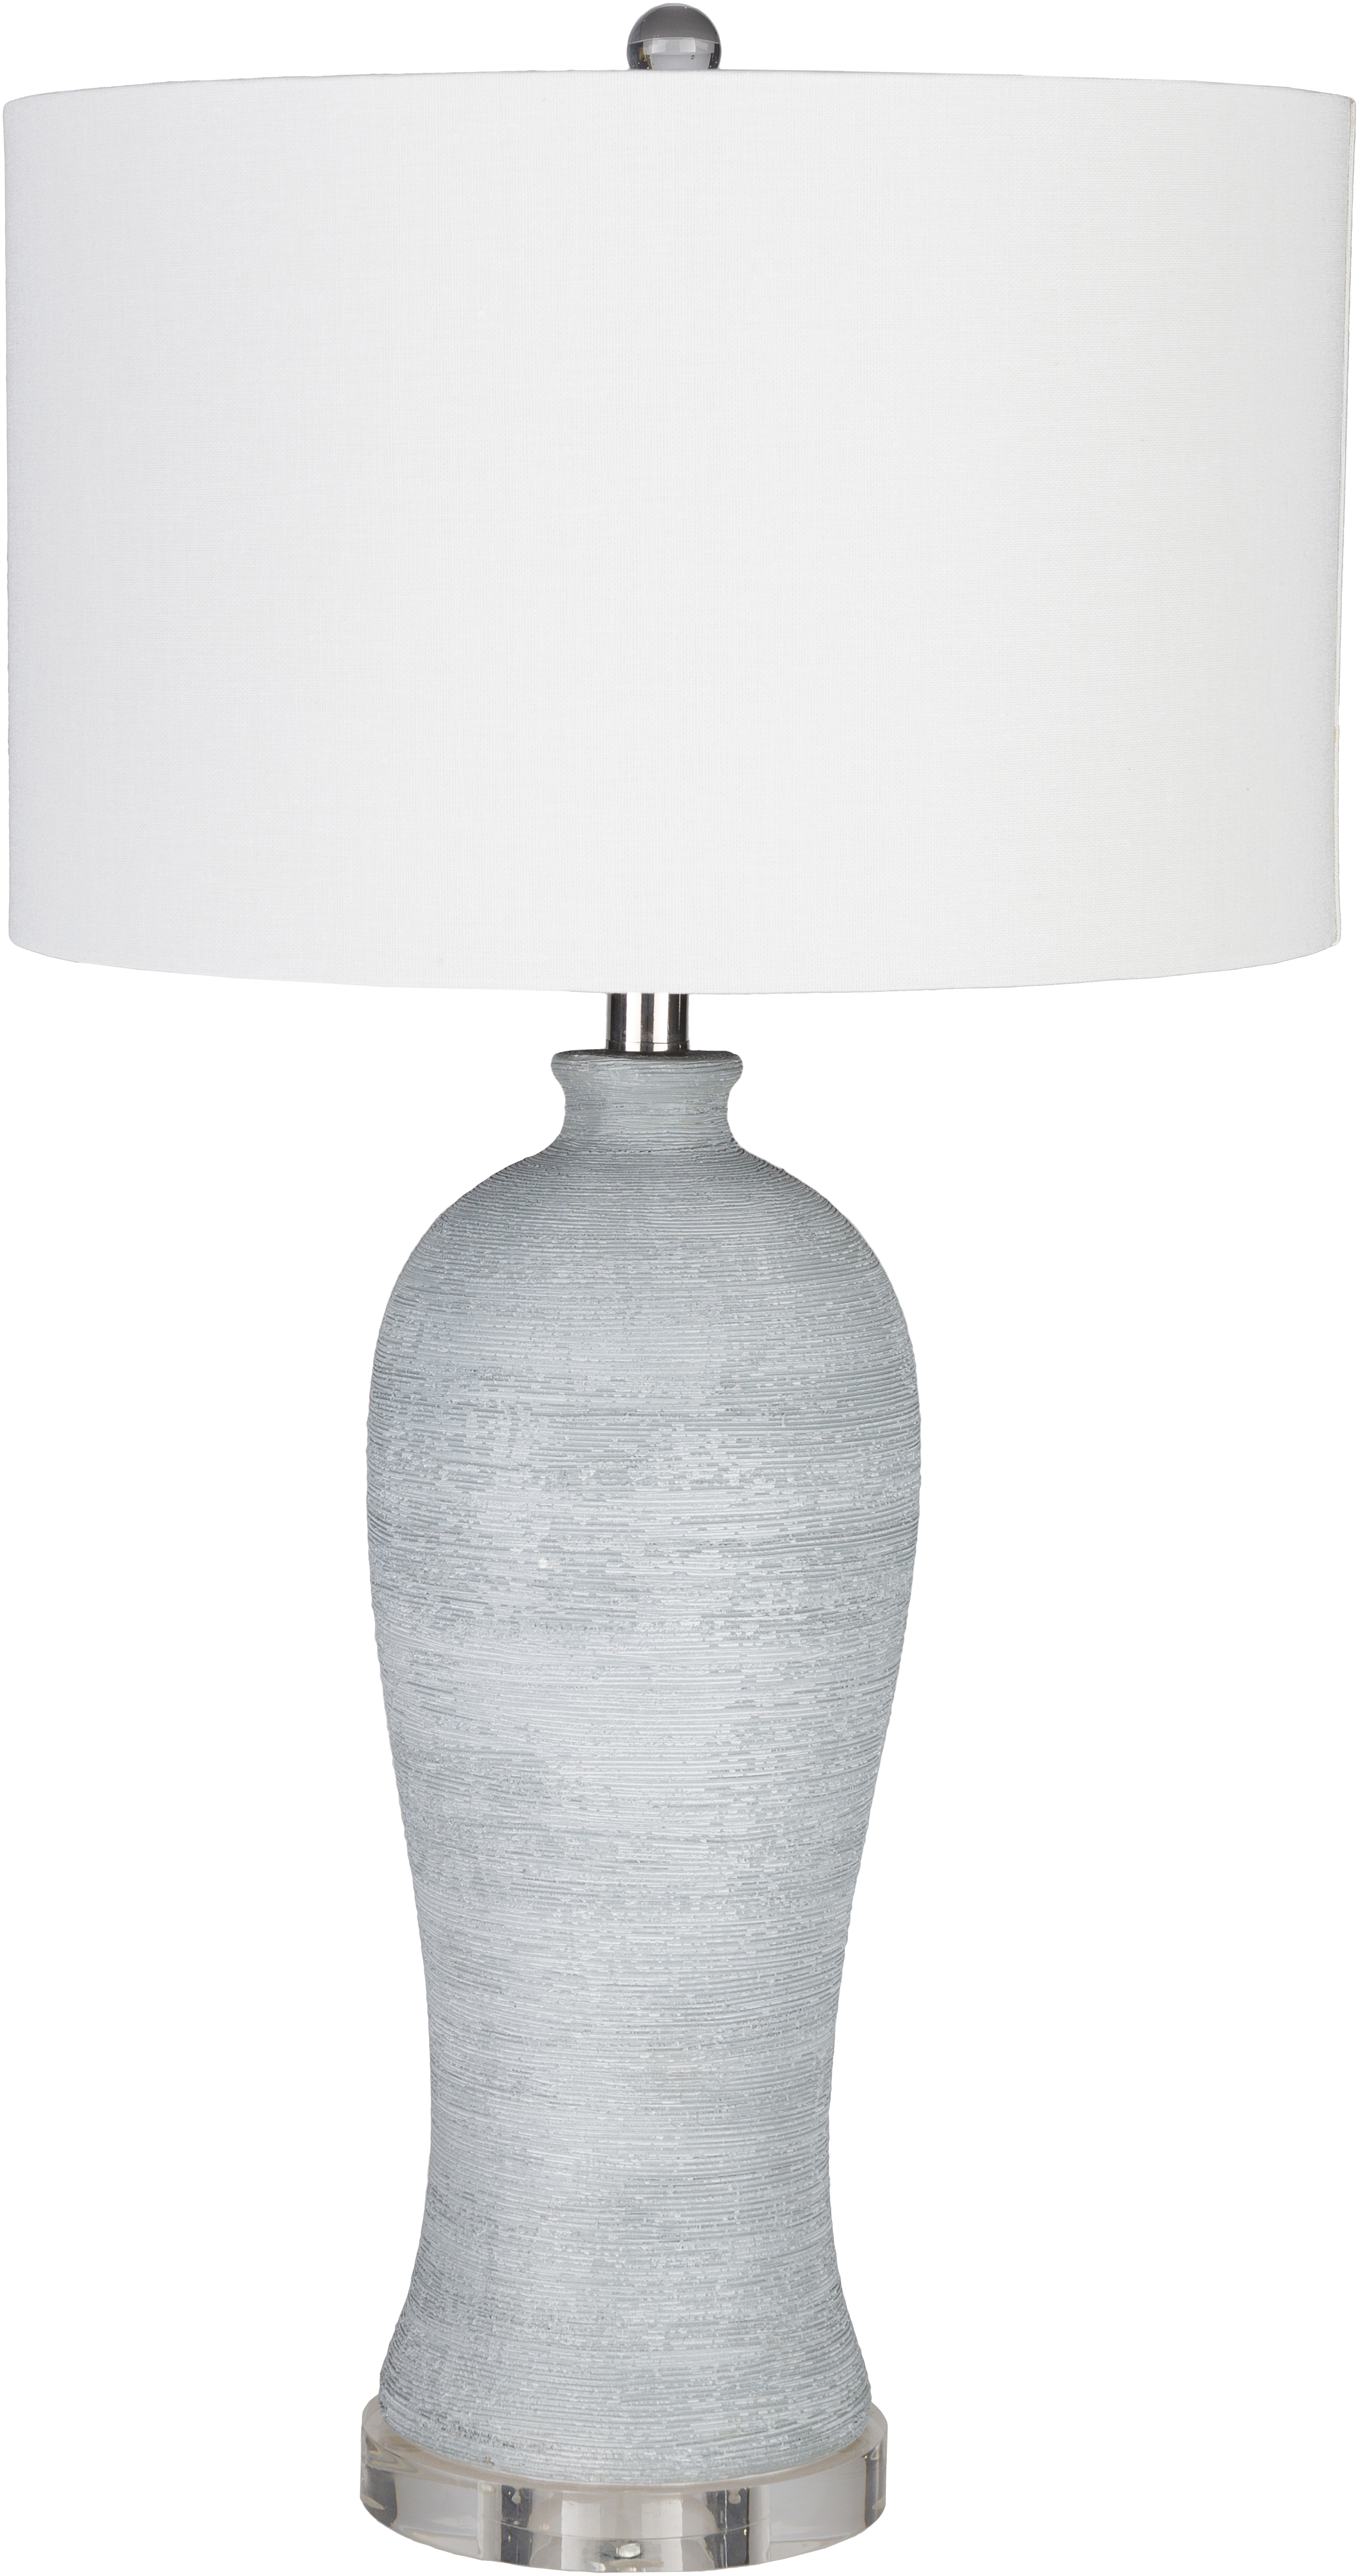 Blaine Table Lamp - Image 0